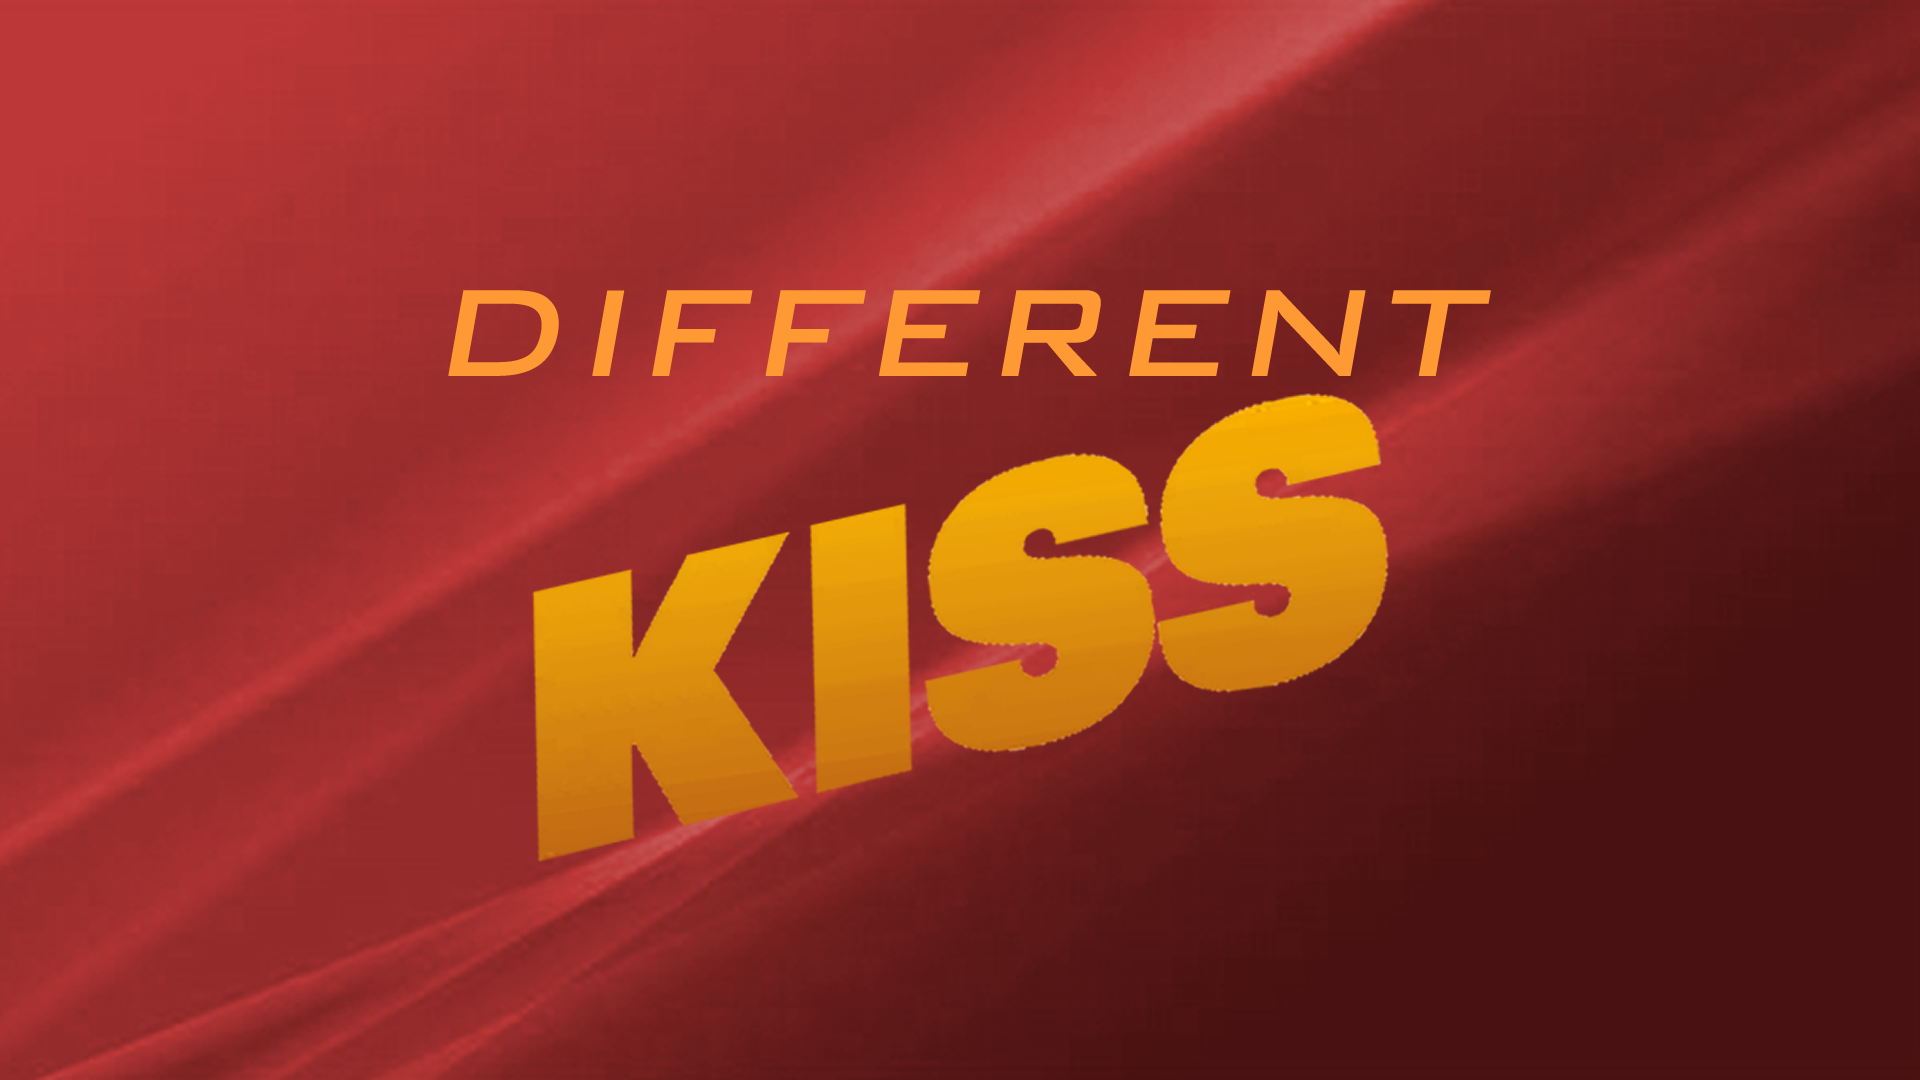 DIFFERENT KISS